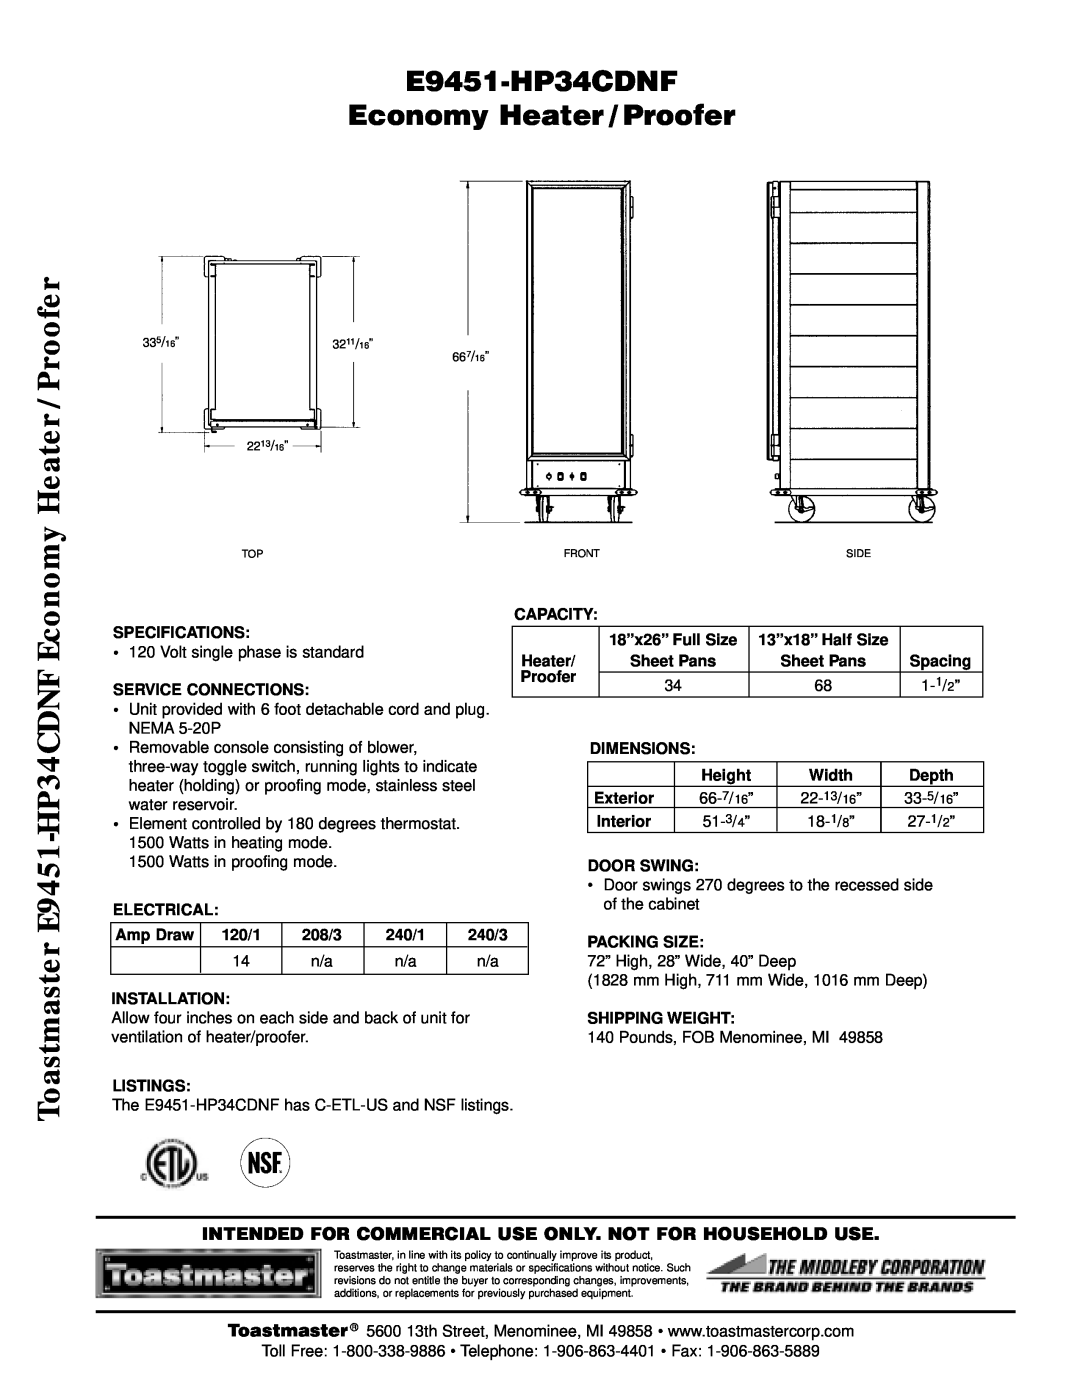 Toastmaster manual E9451-HP34CDNF Economy Heater / Proofer 